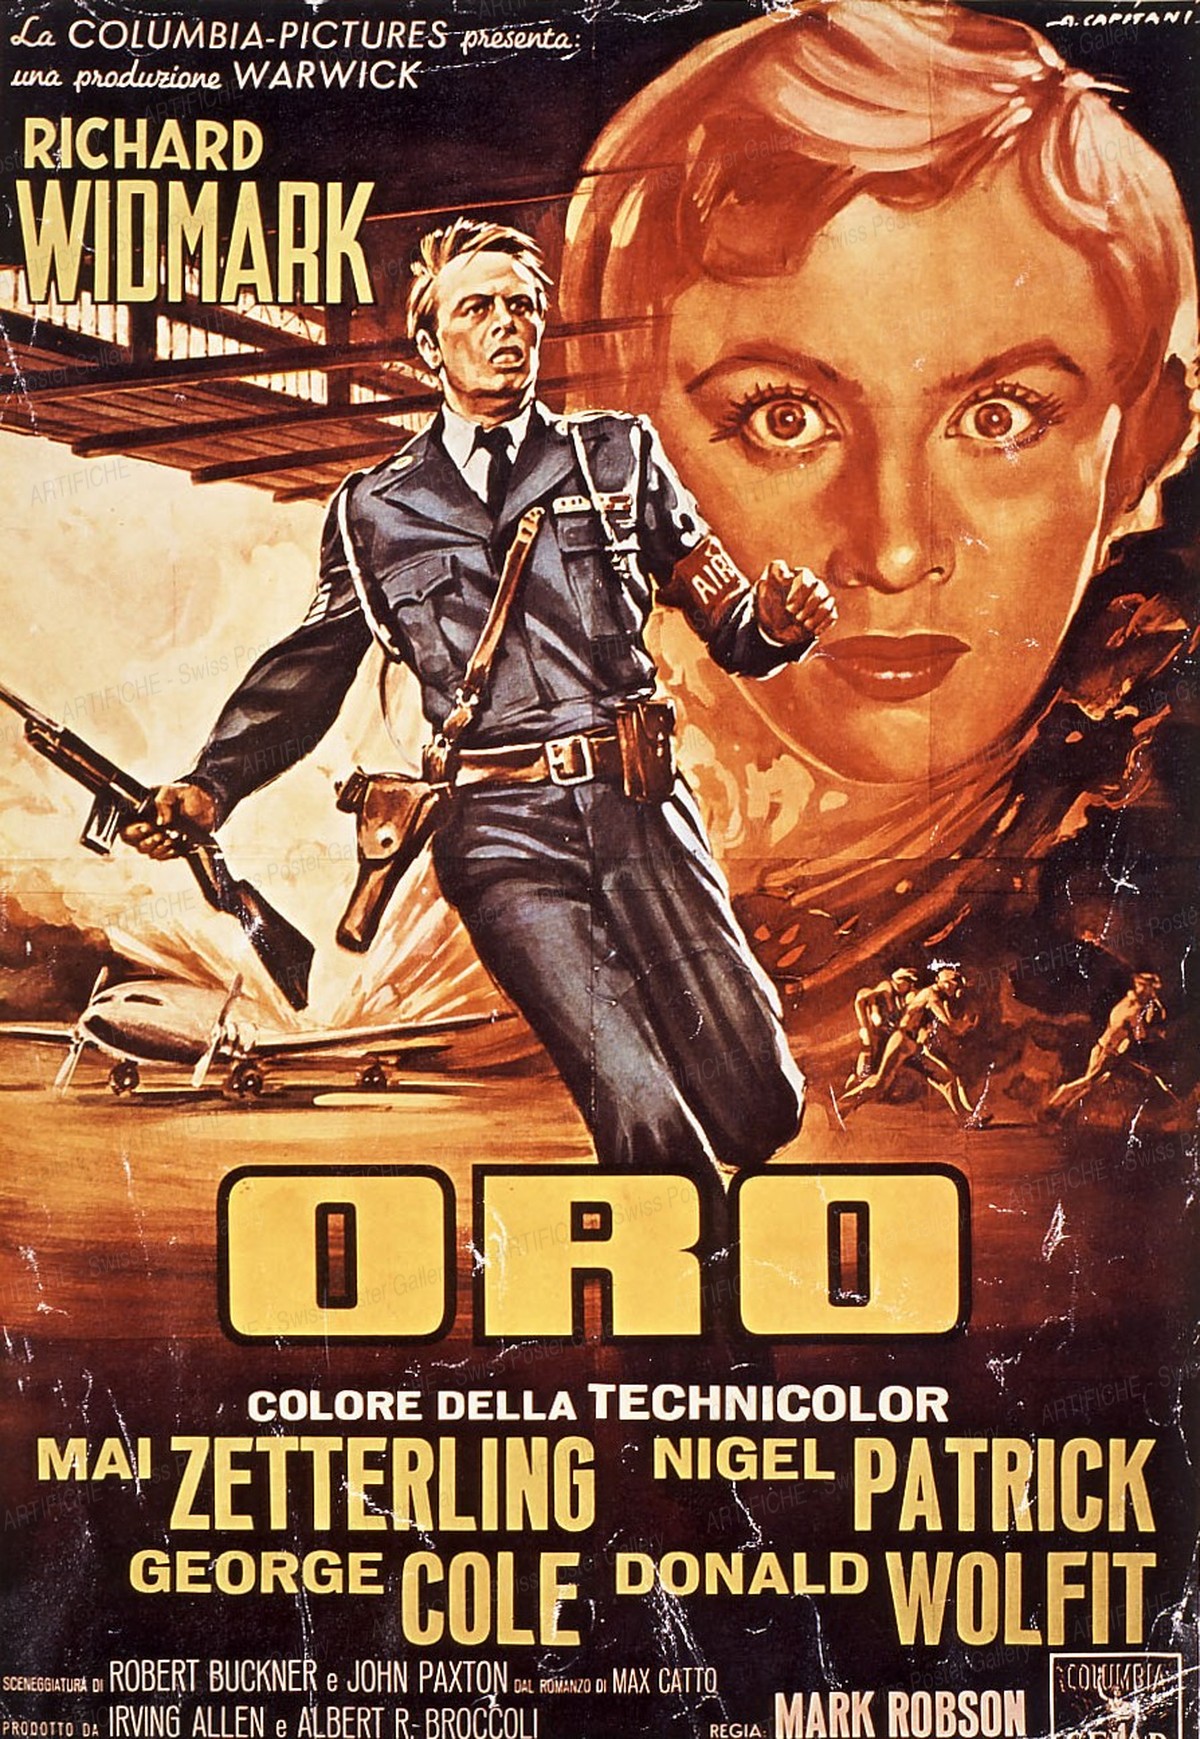 Film “ORO” – Capitani – Richard Widmark – by Albert R. Brokkoli, Artist unknown